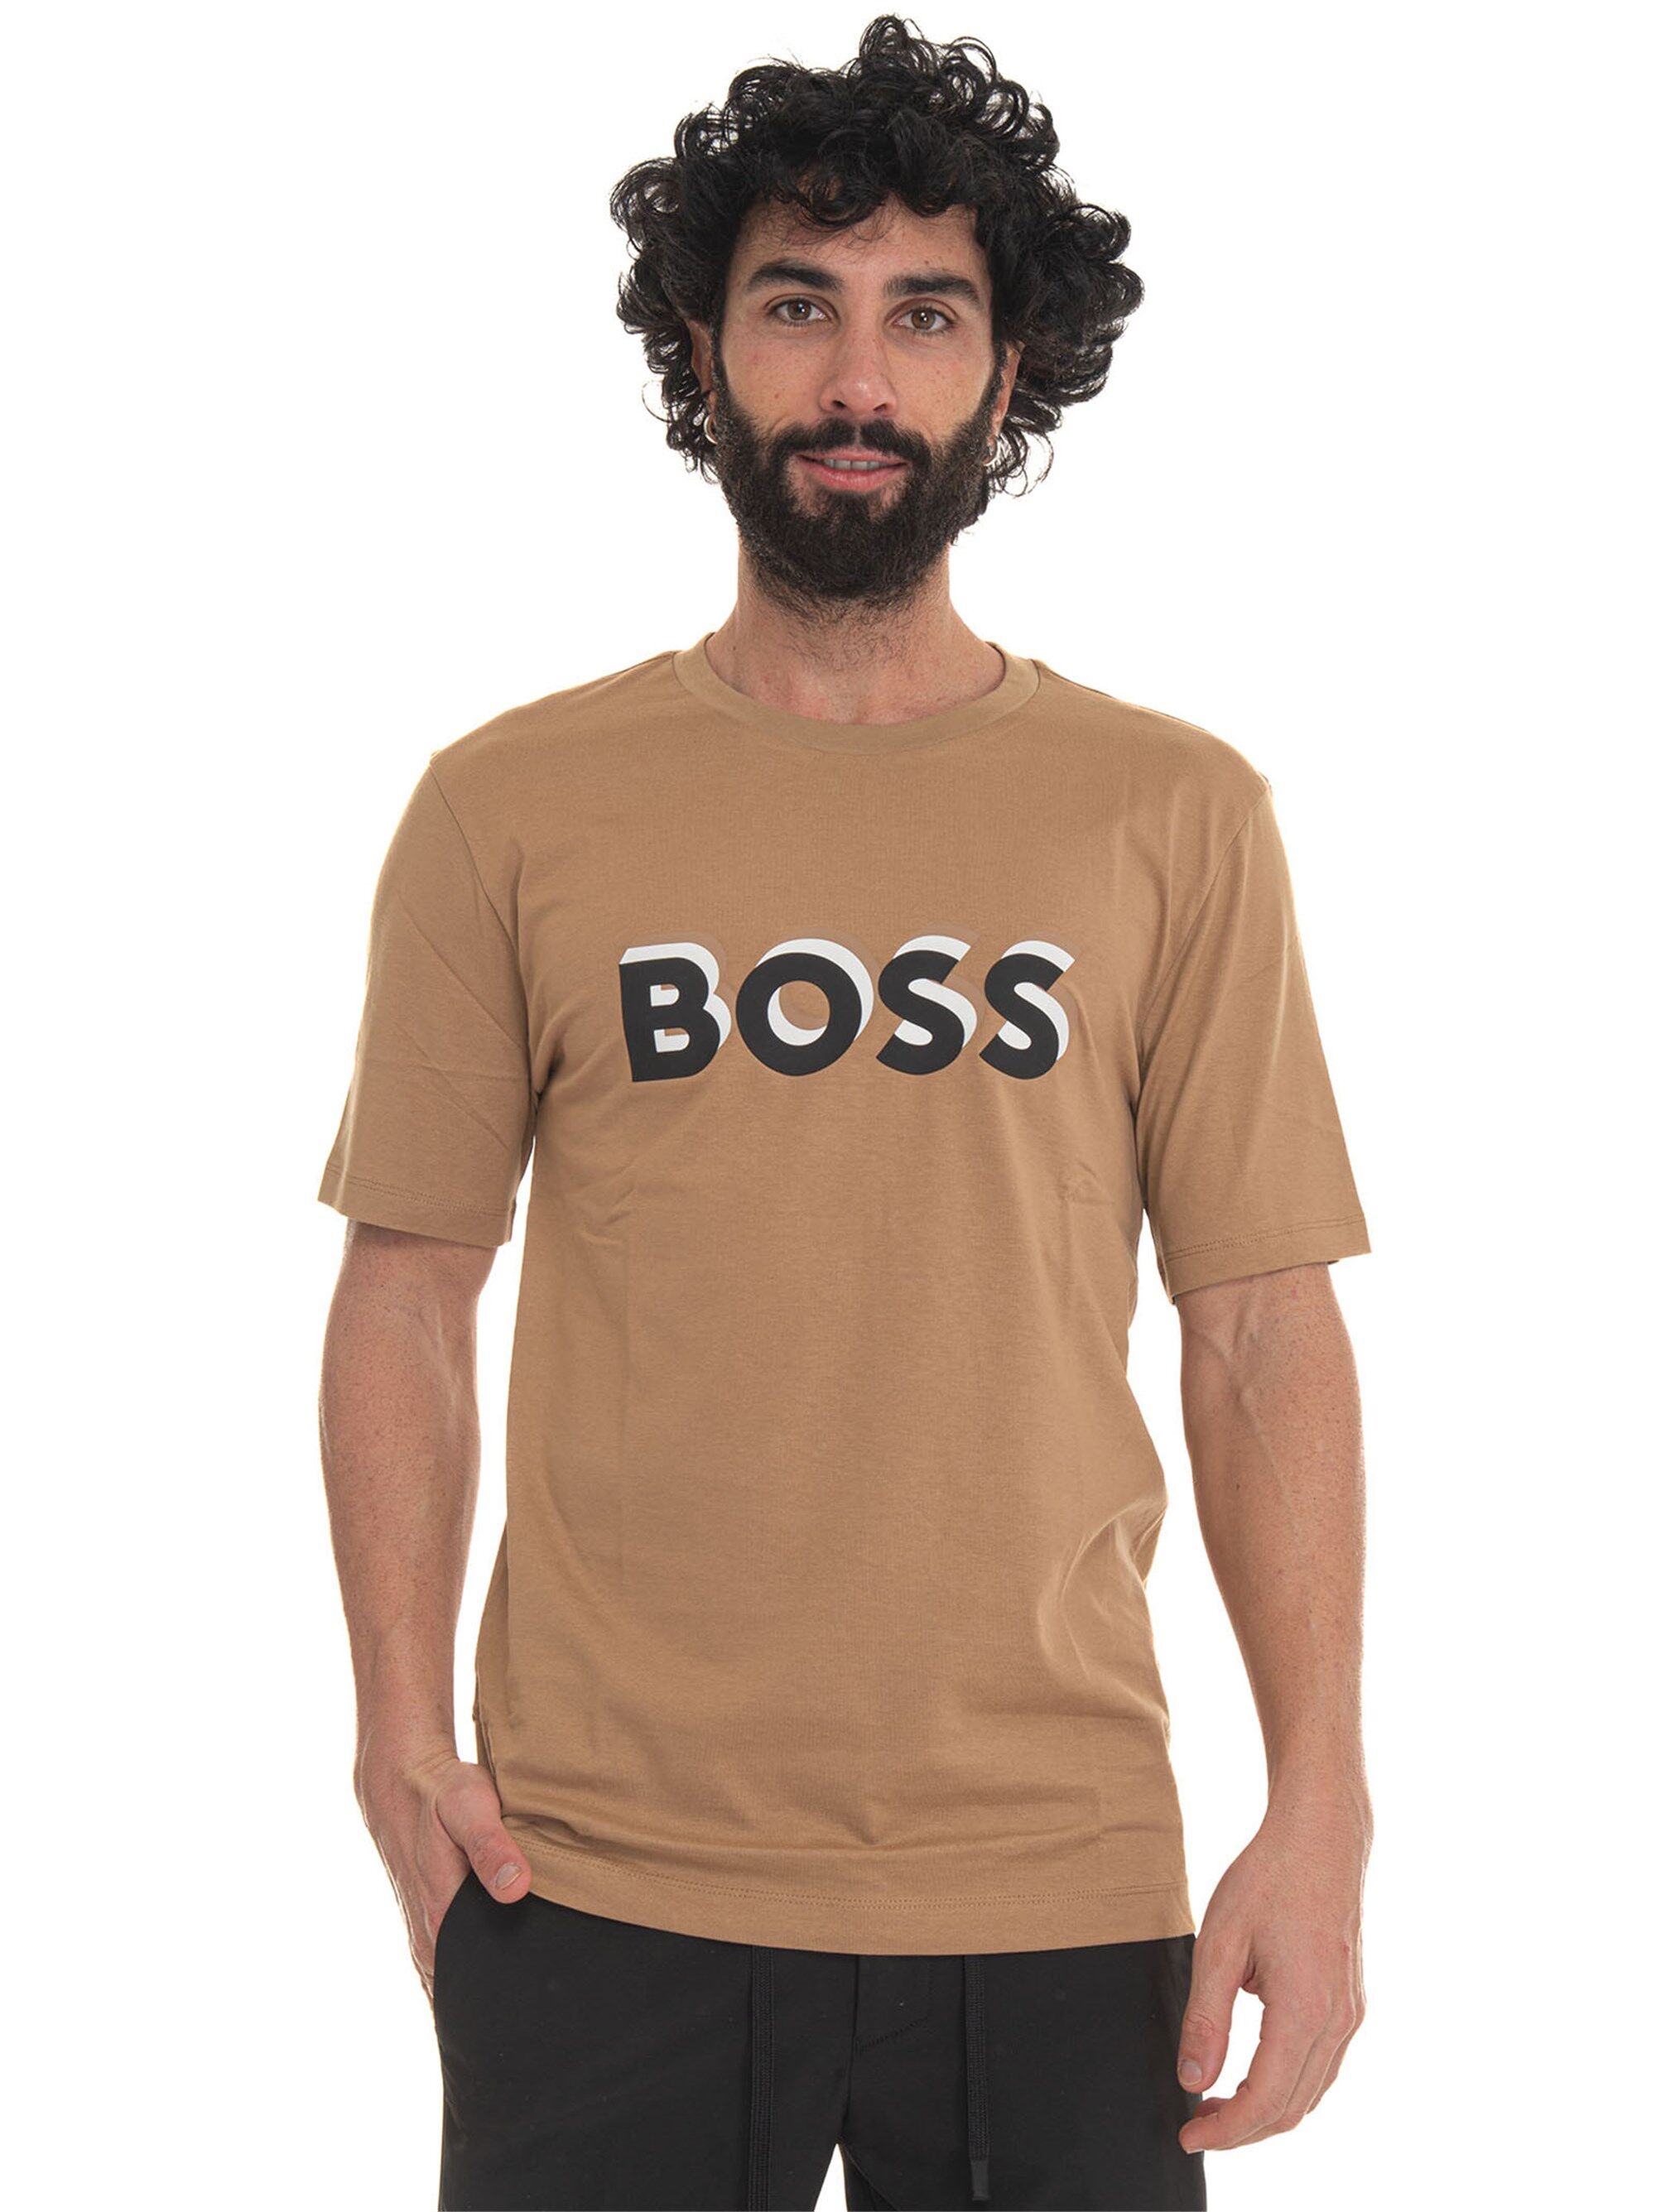 Boss T-shirt girocollo mezza manica Beige Uomo 3XL